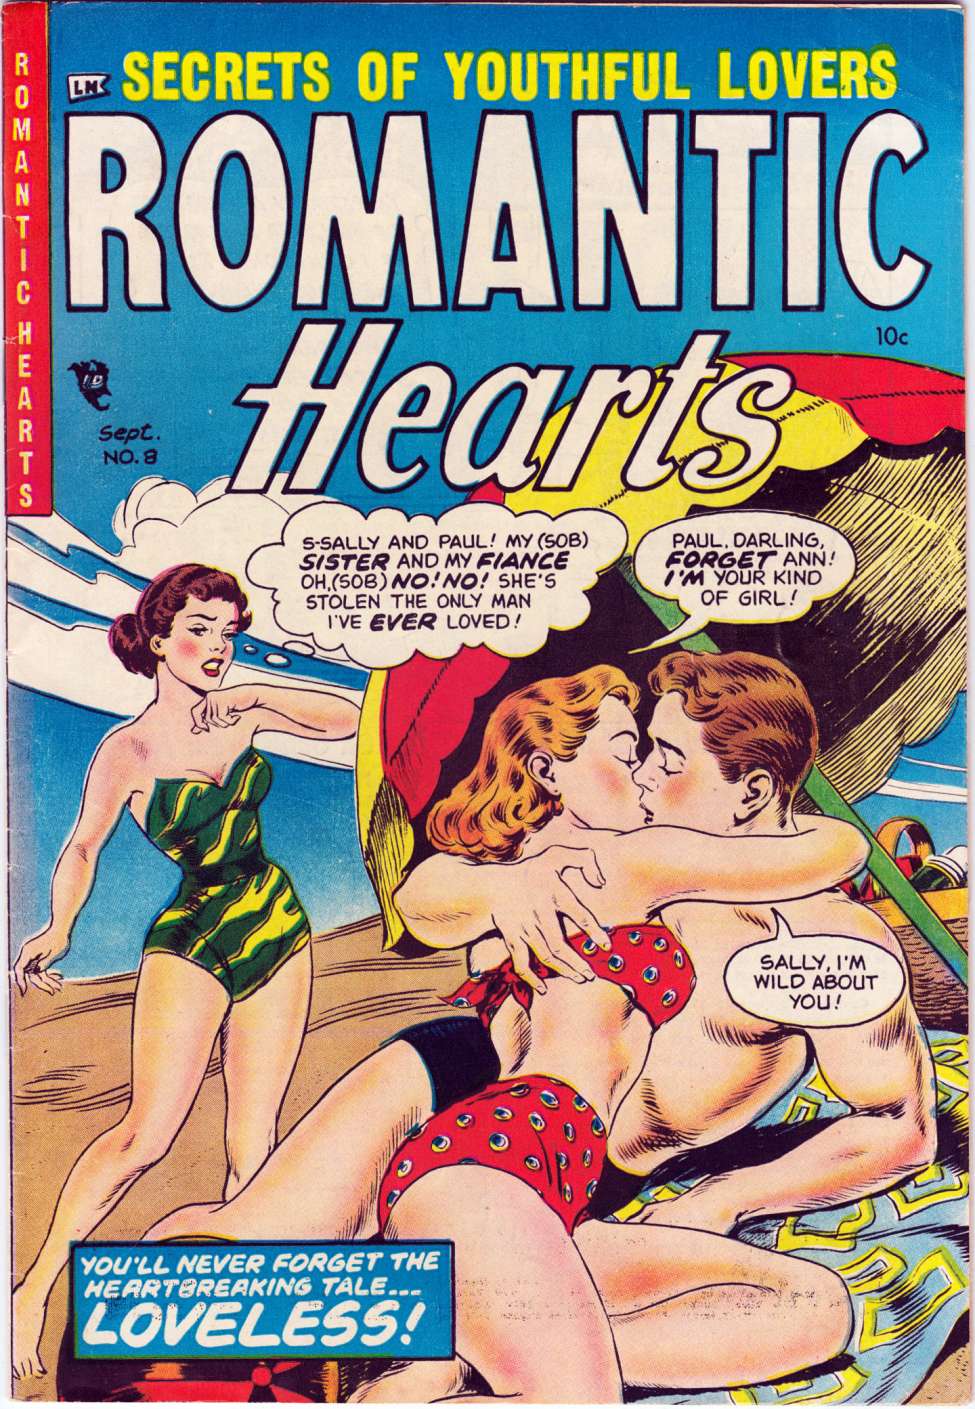 Book Cover For Romantic Hearts v2 8 (alt) - Version 2